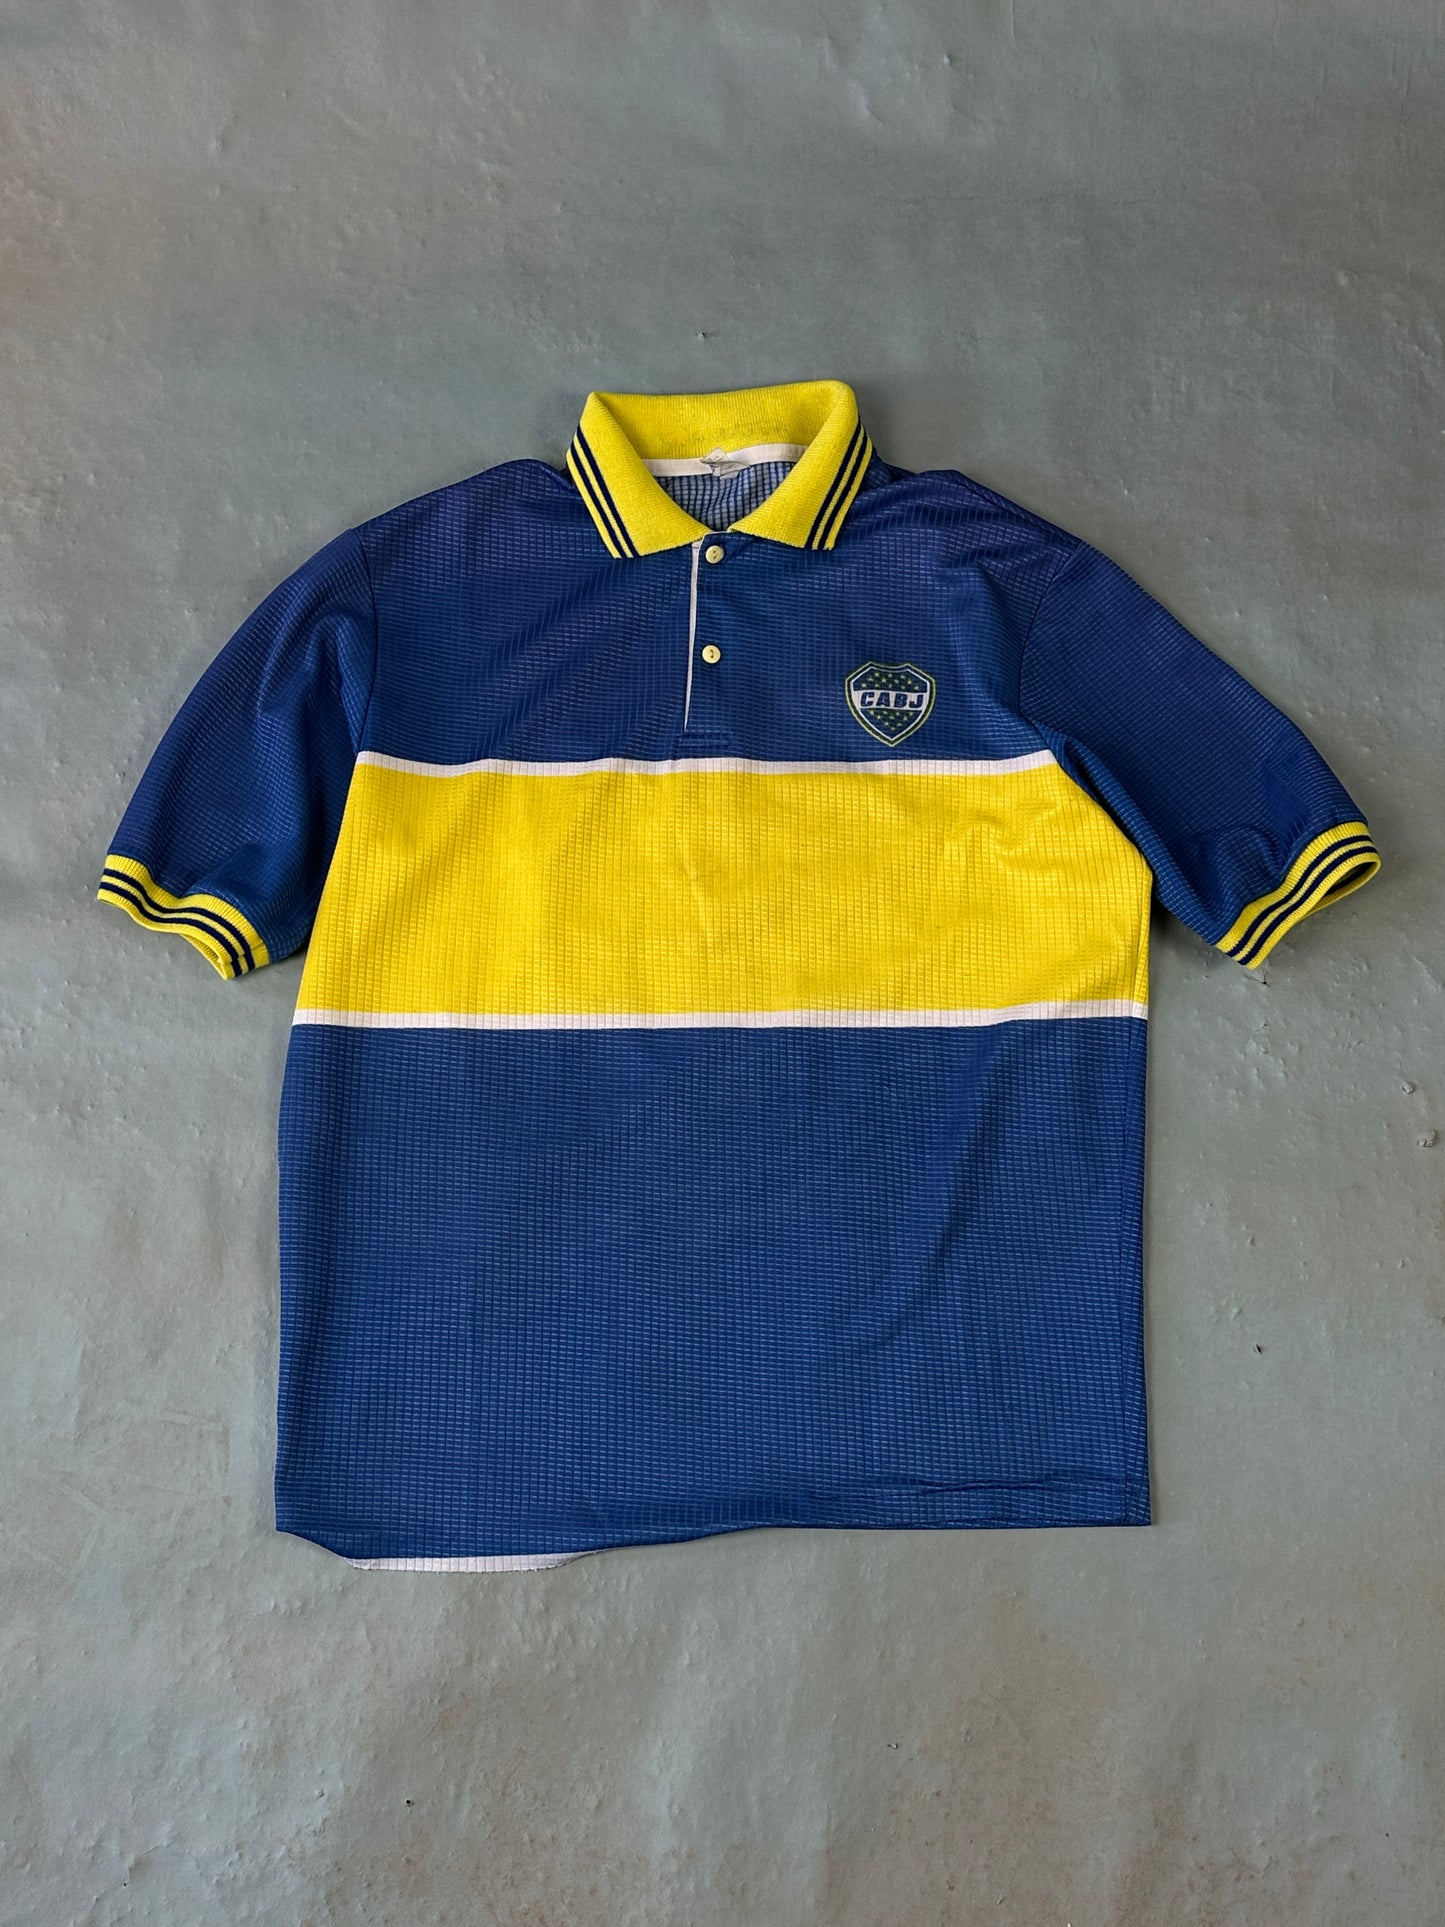 Jersey Boca Juniors Vintage